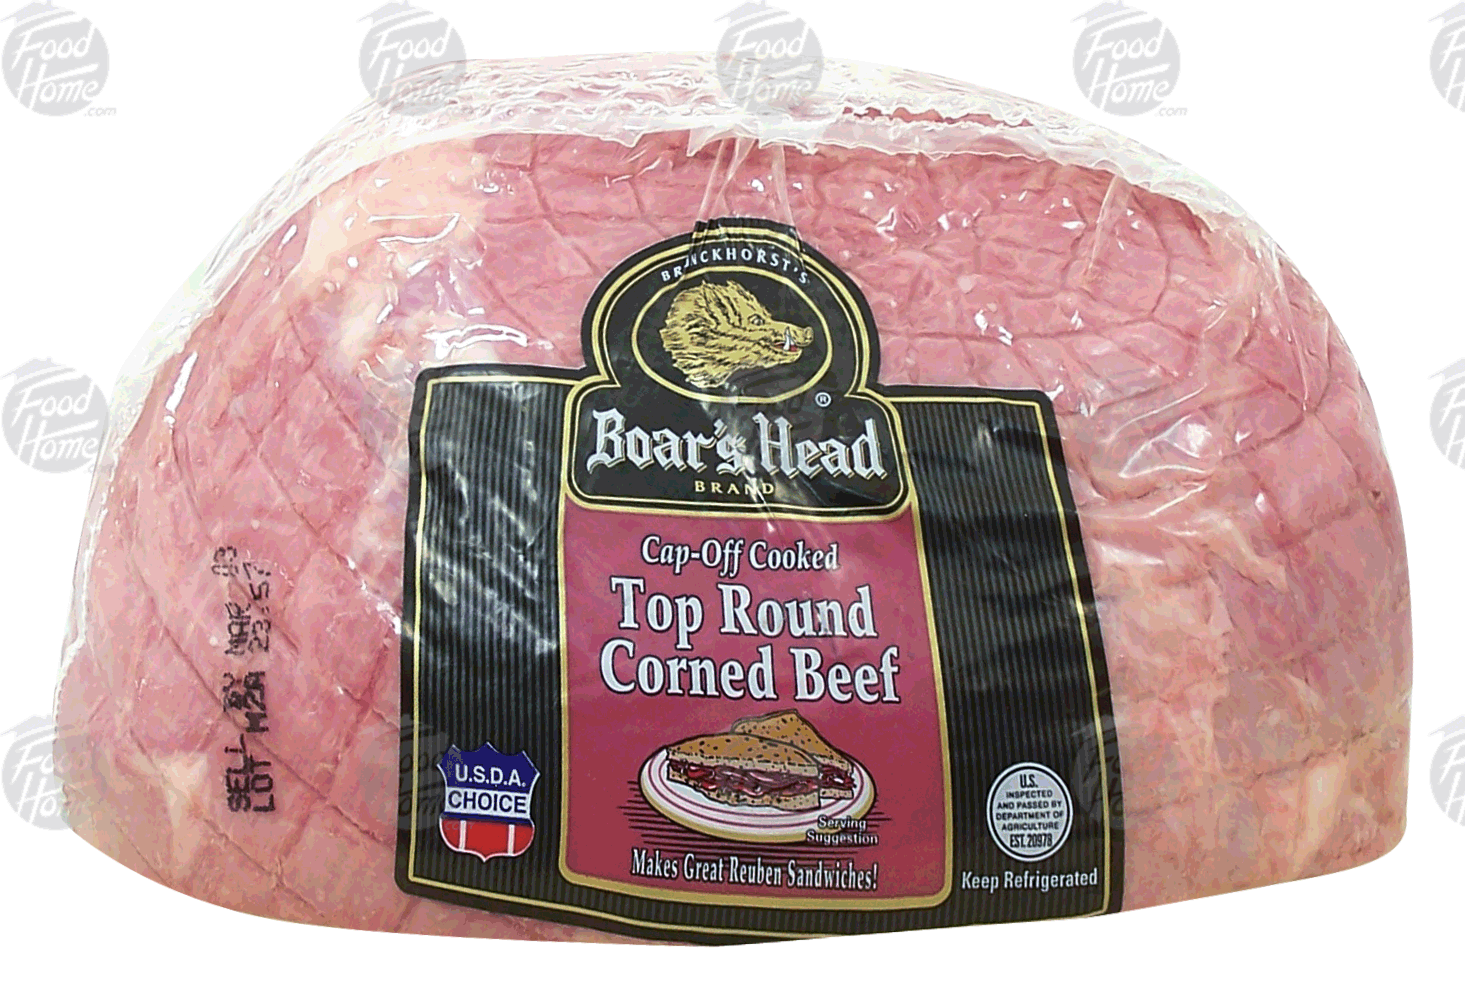 Boar's Head Brunckhorst's top round corned beef, cap-off cooked Full-Size Picture